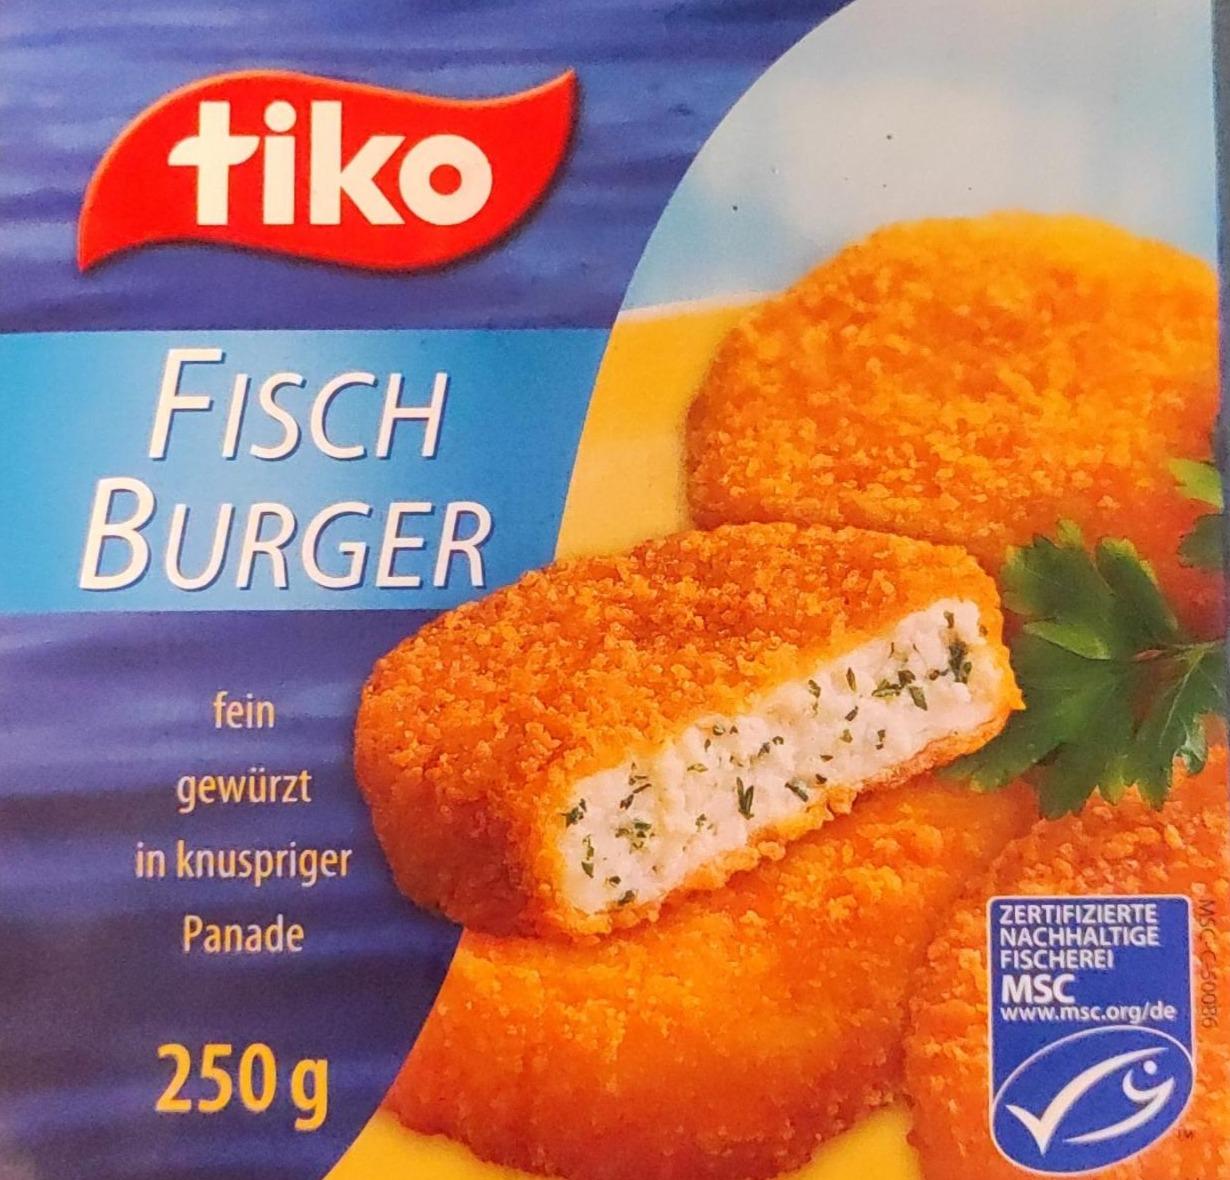 Фото - Тіко Фішбургер Fisch Burger Tiko